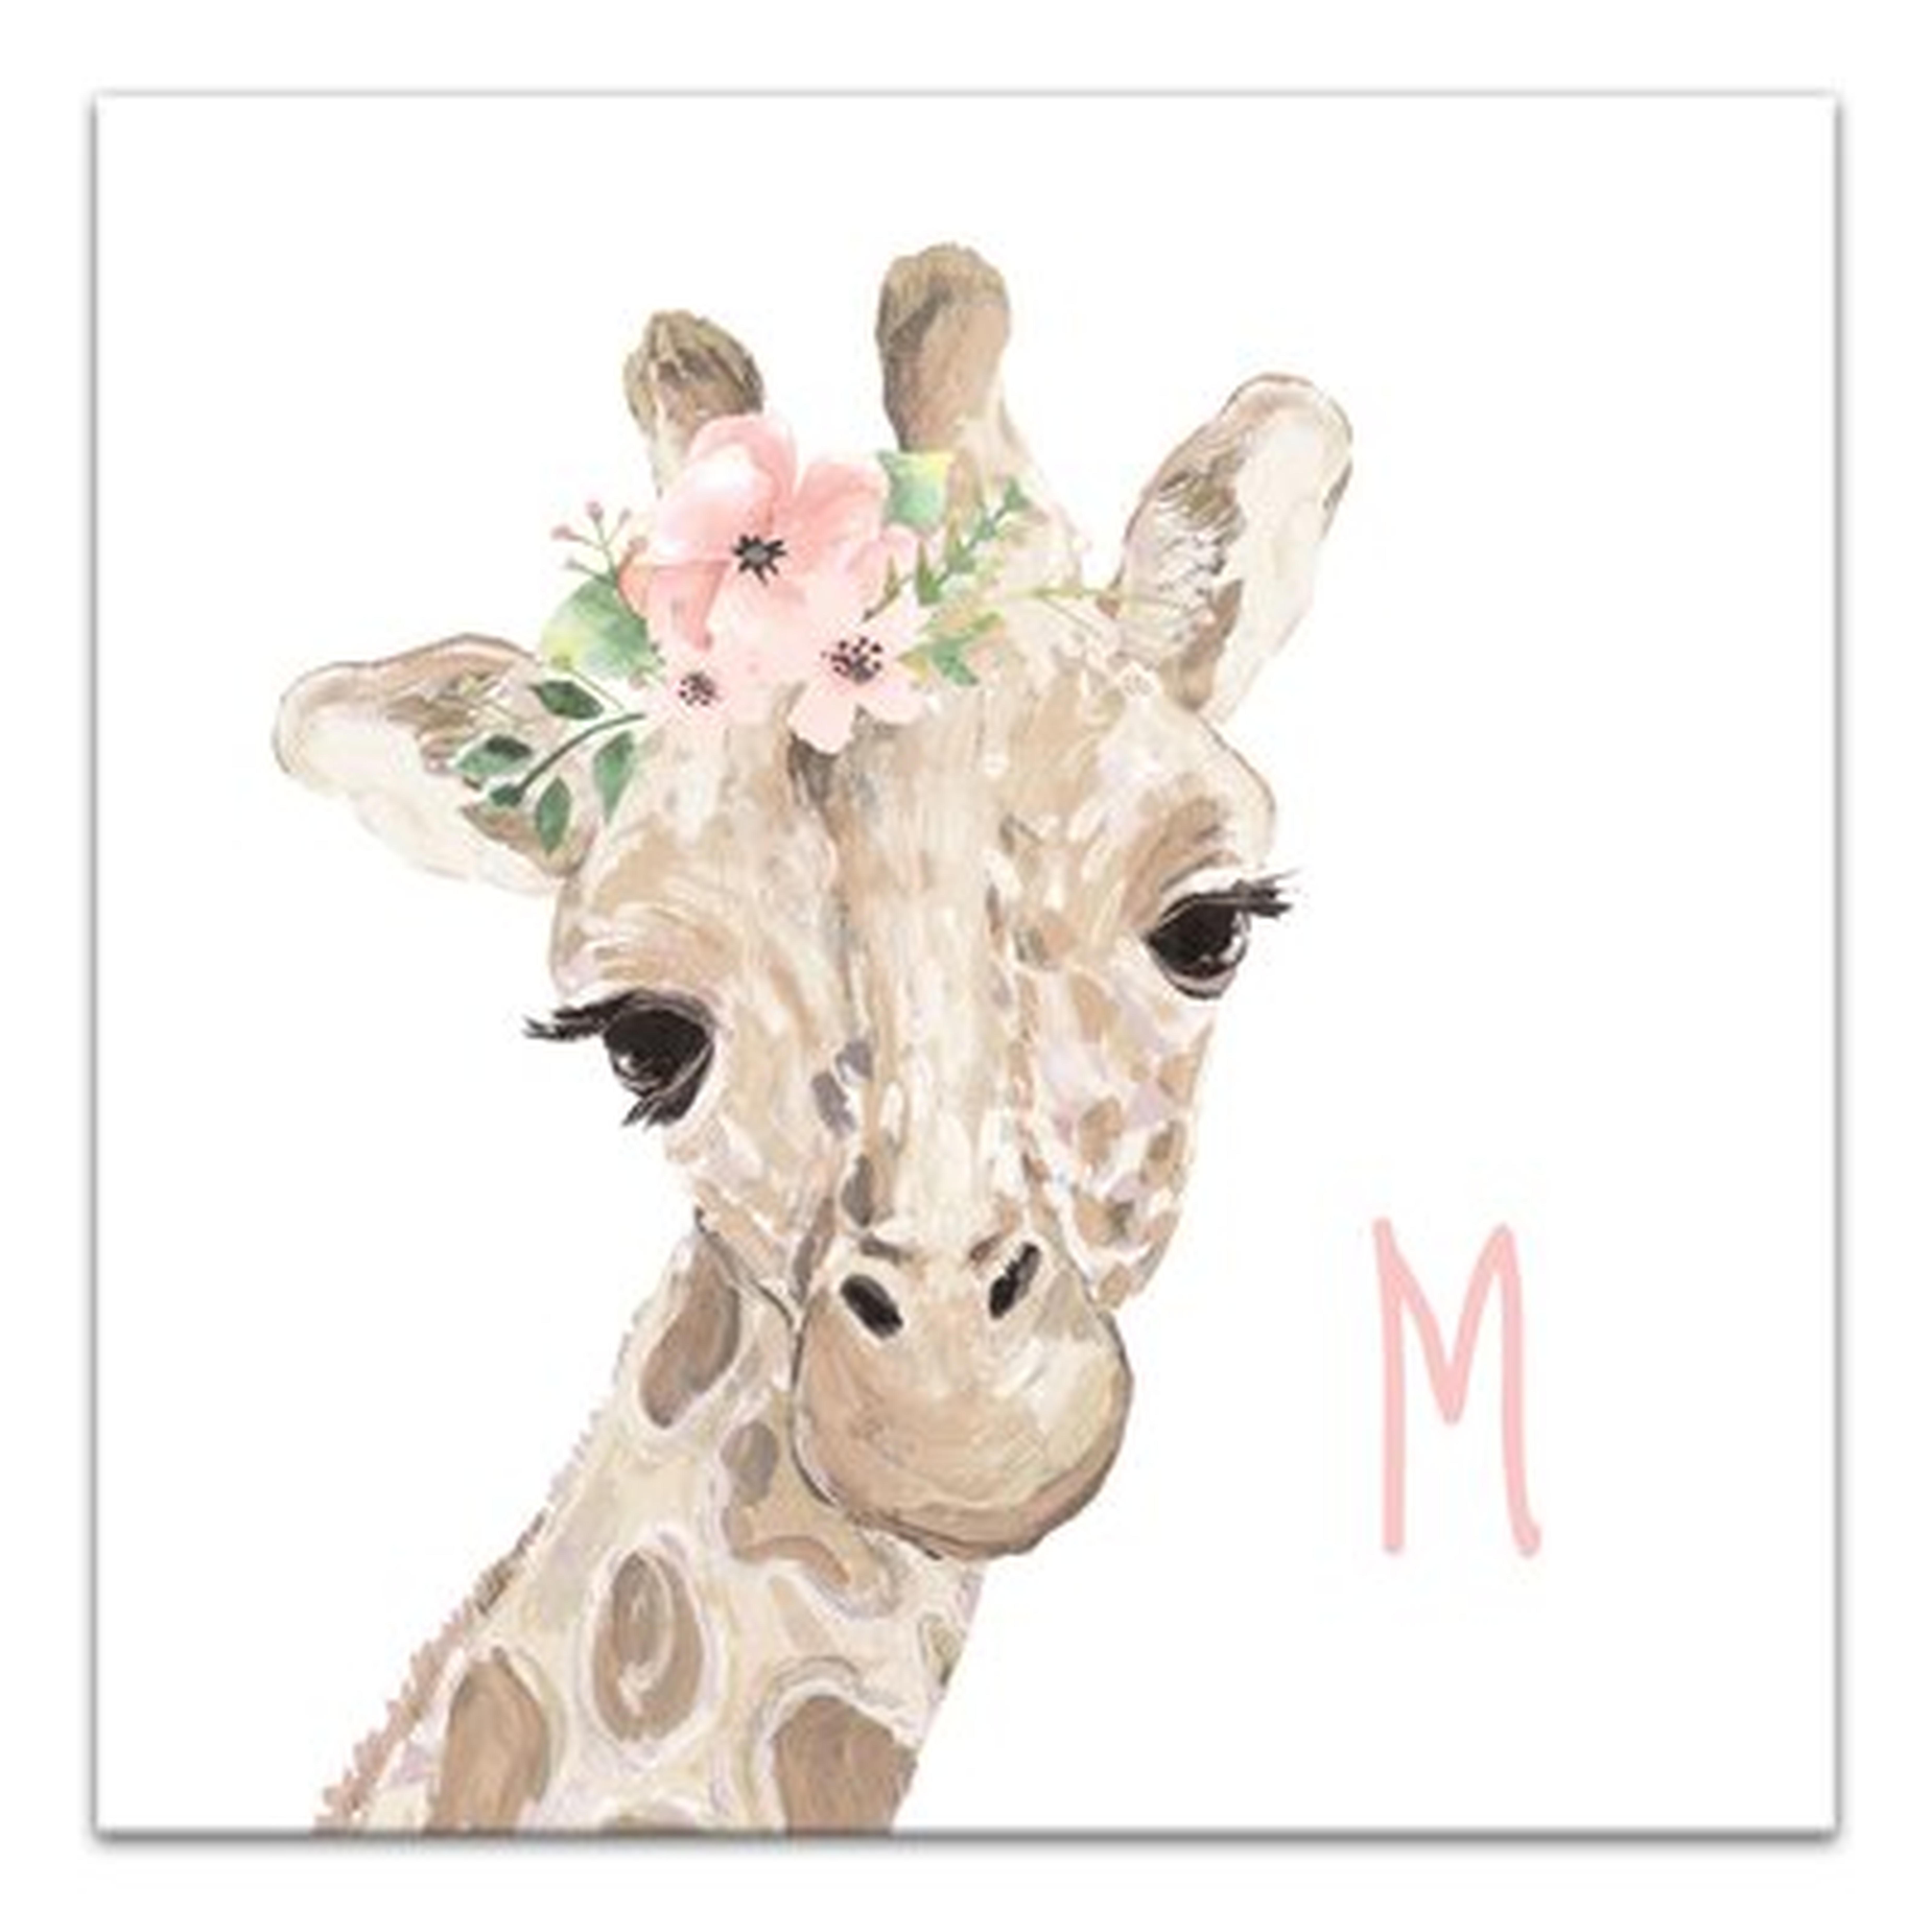 Baby Giraffe With Flowers Print On Canvas - Wayfair